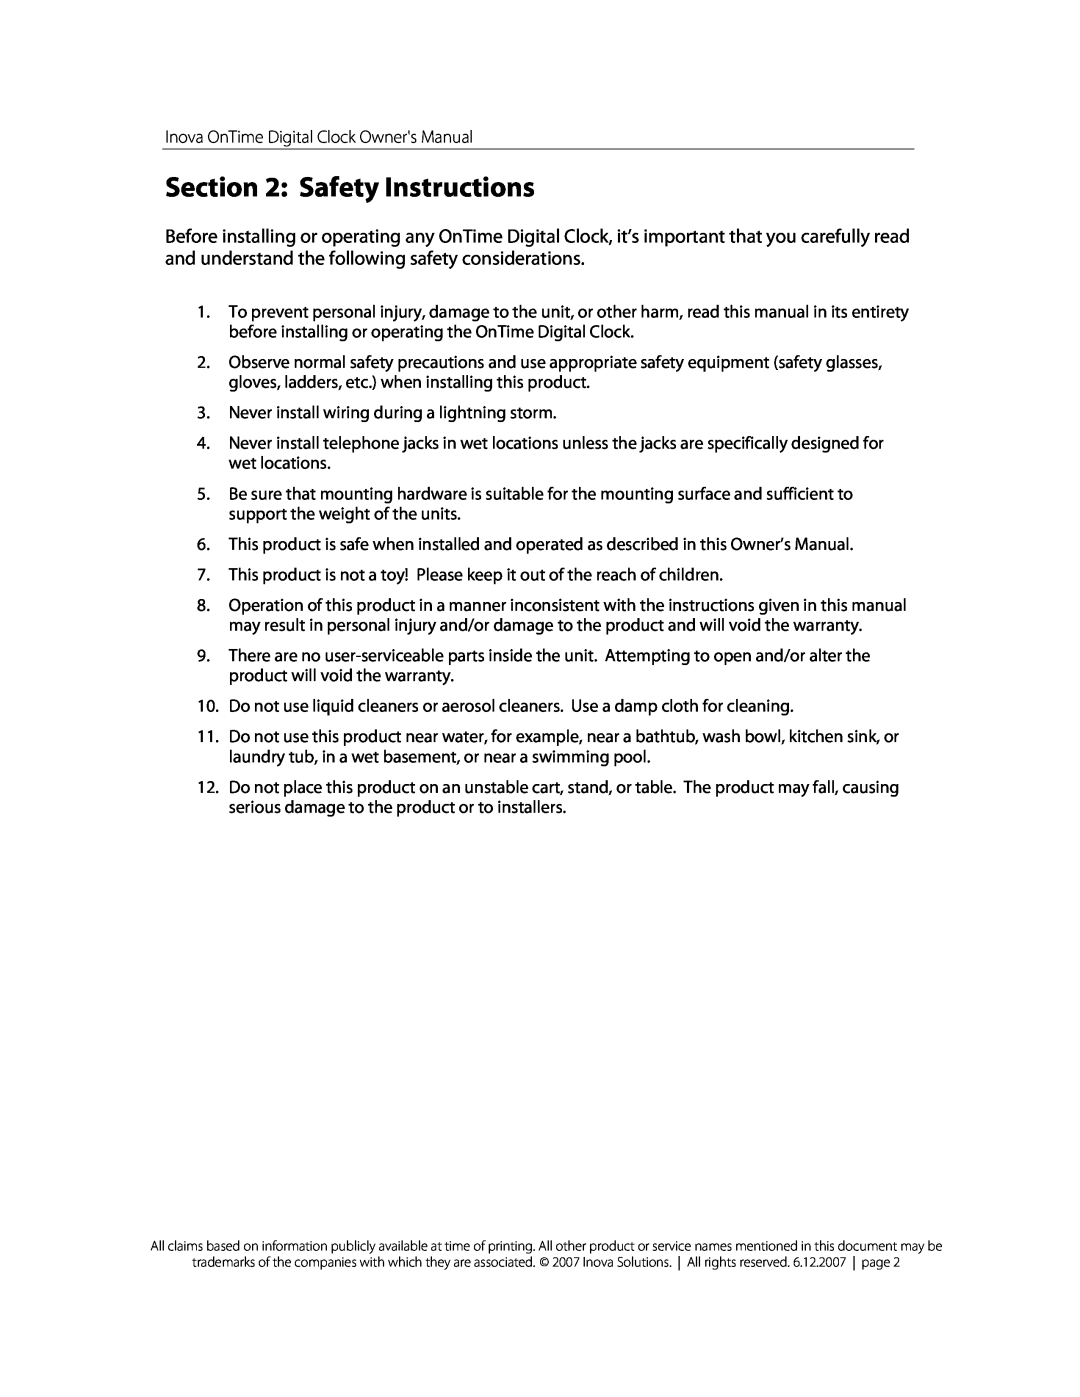 Inova OnTimeTM owner manual Safety Instructions 